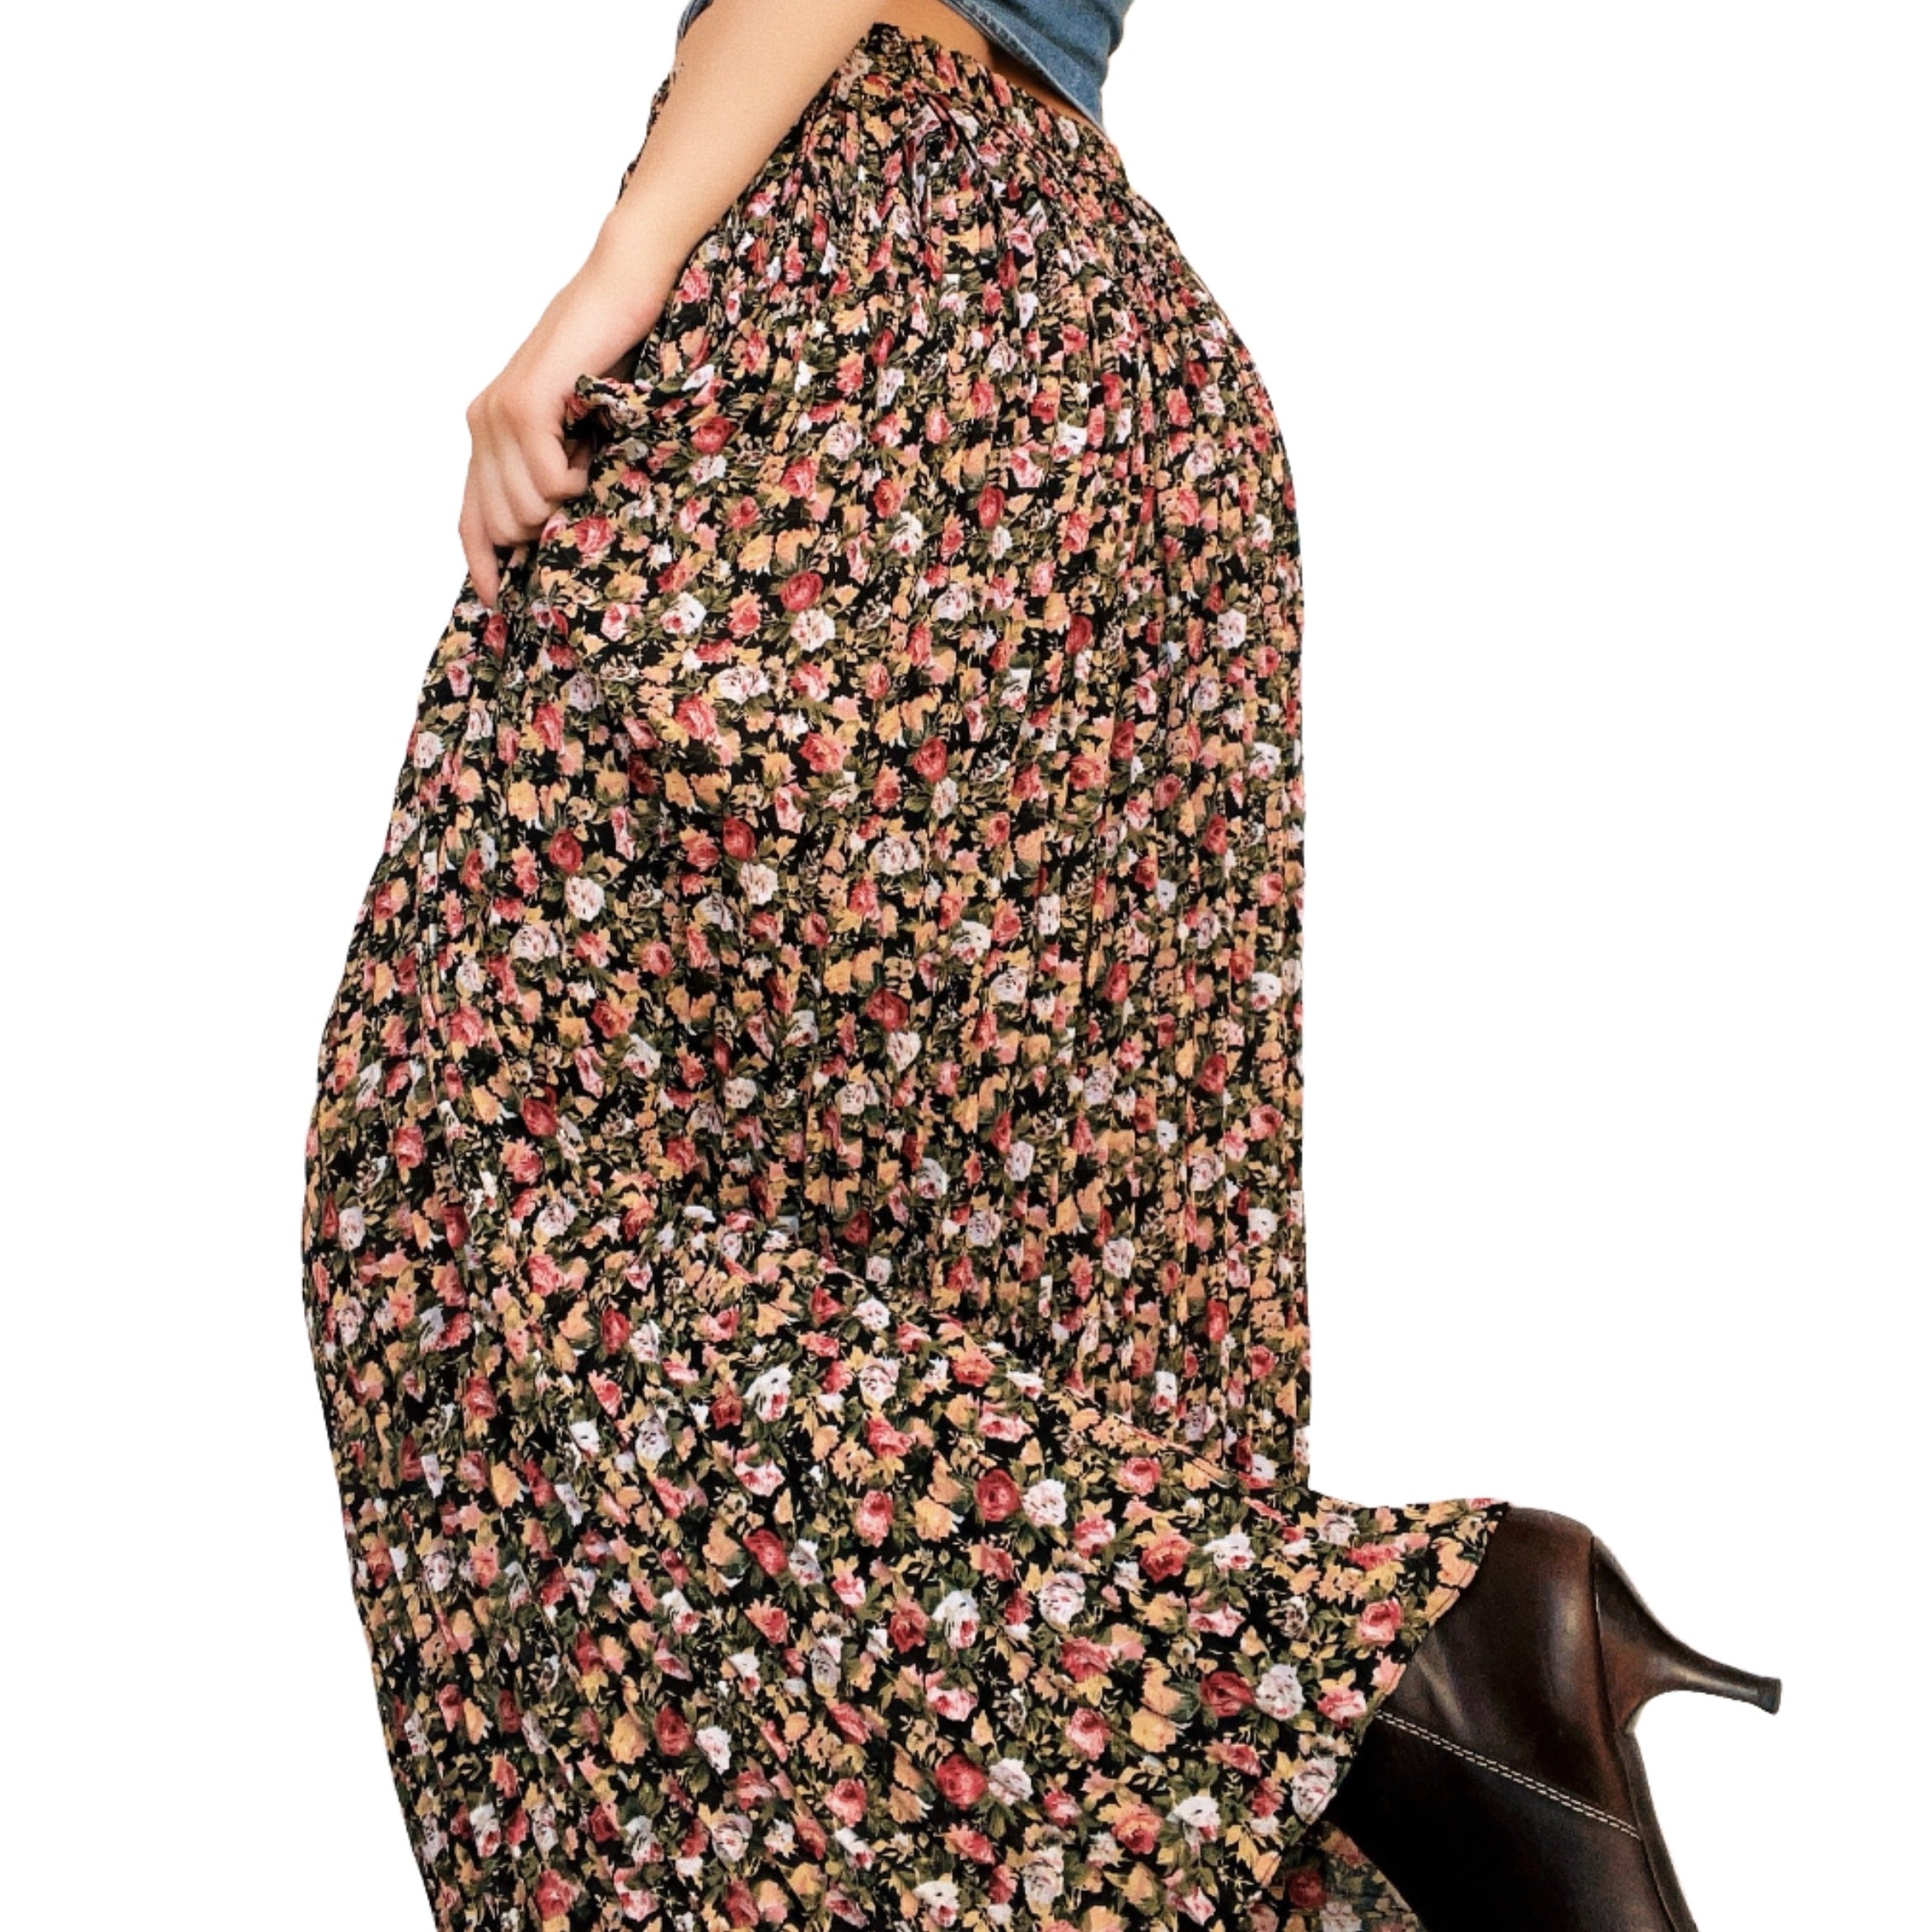 Vintage Floral Maxi Skirt (XS/S)